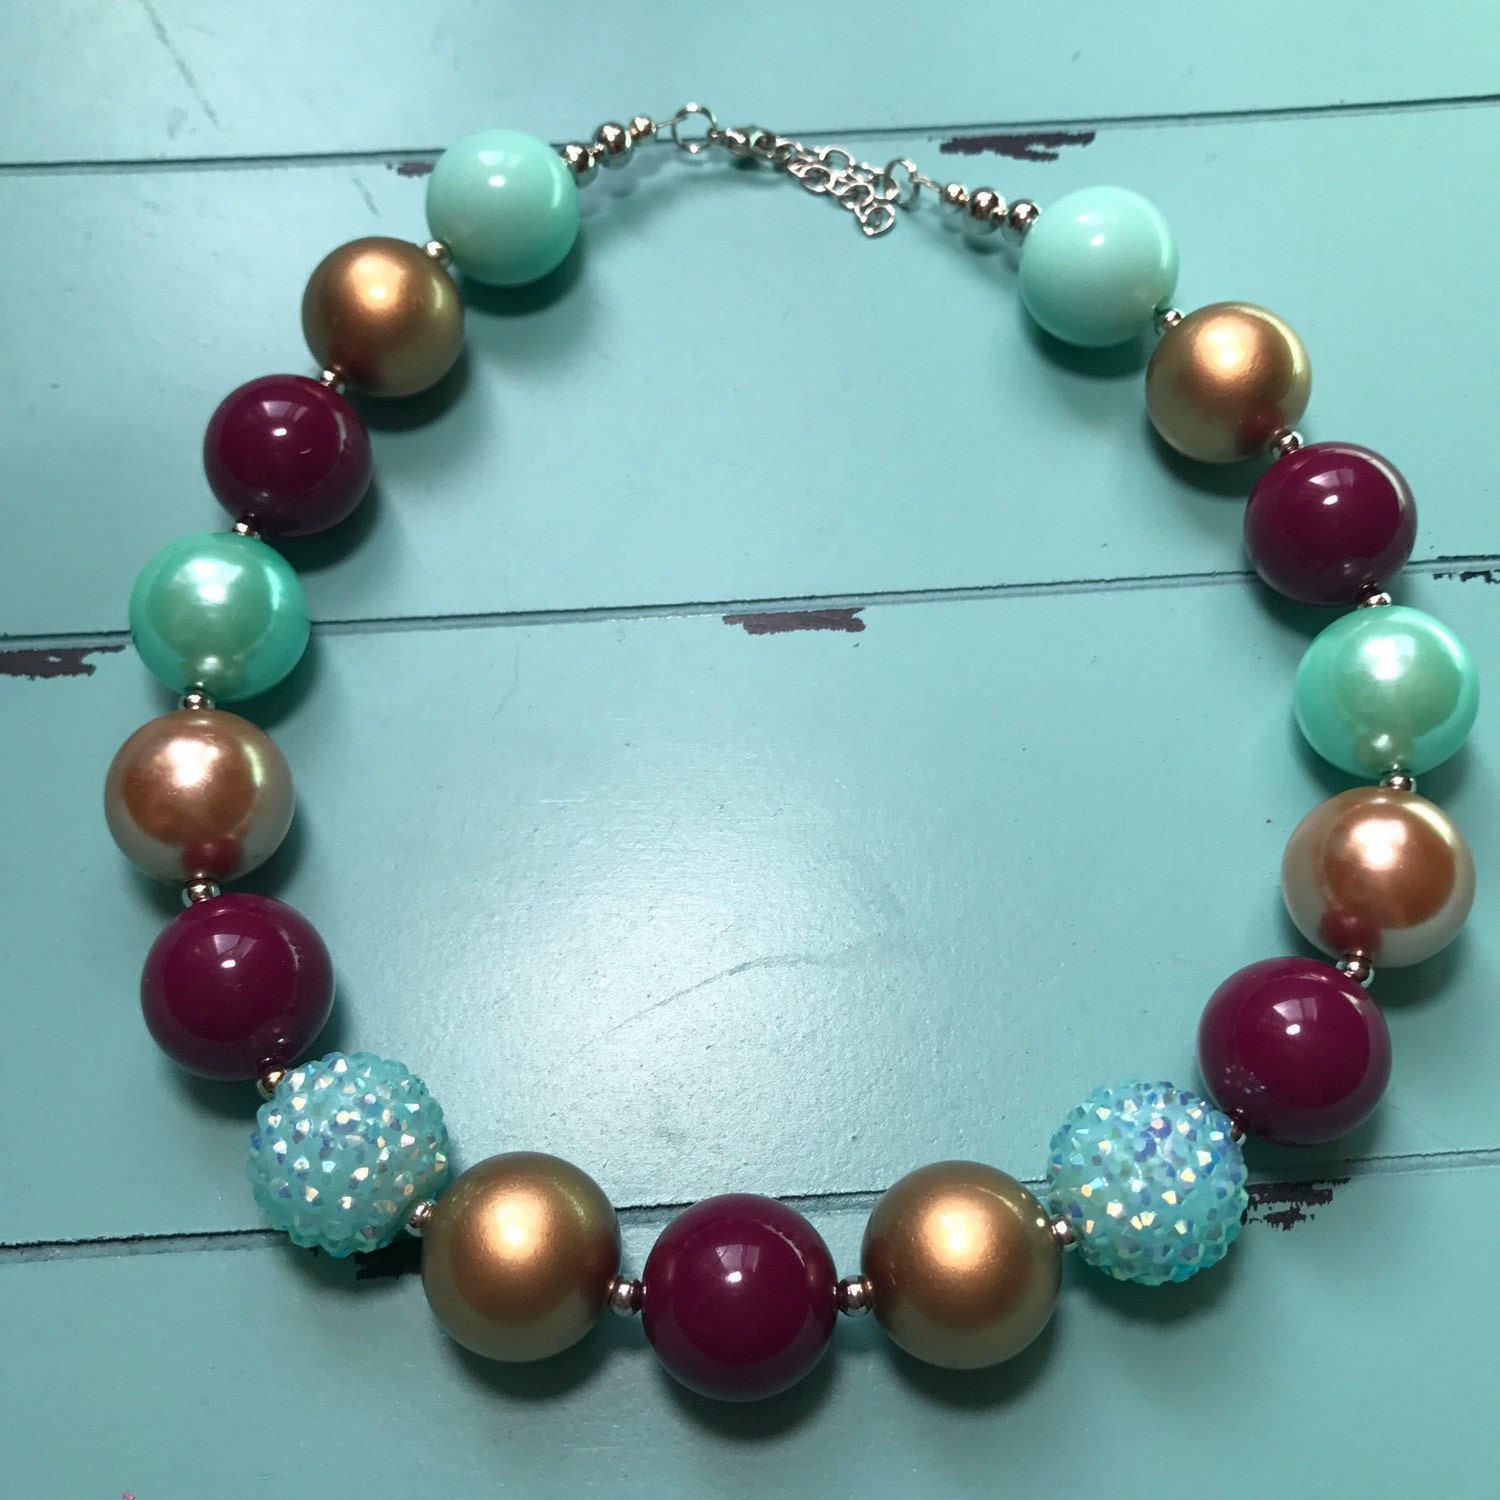 Chunky necklace chunky bead necklace photo prop necklace | Etsy